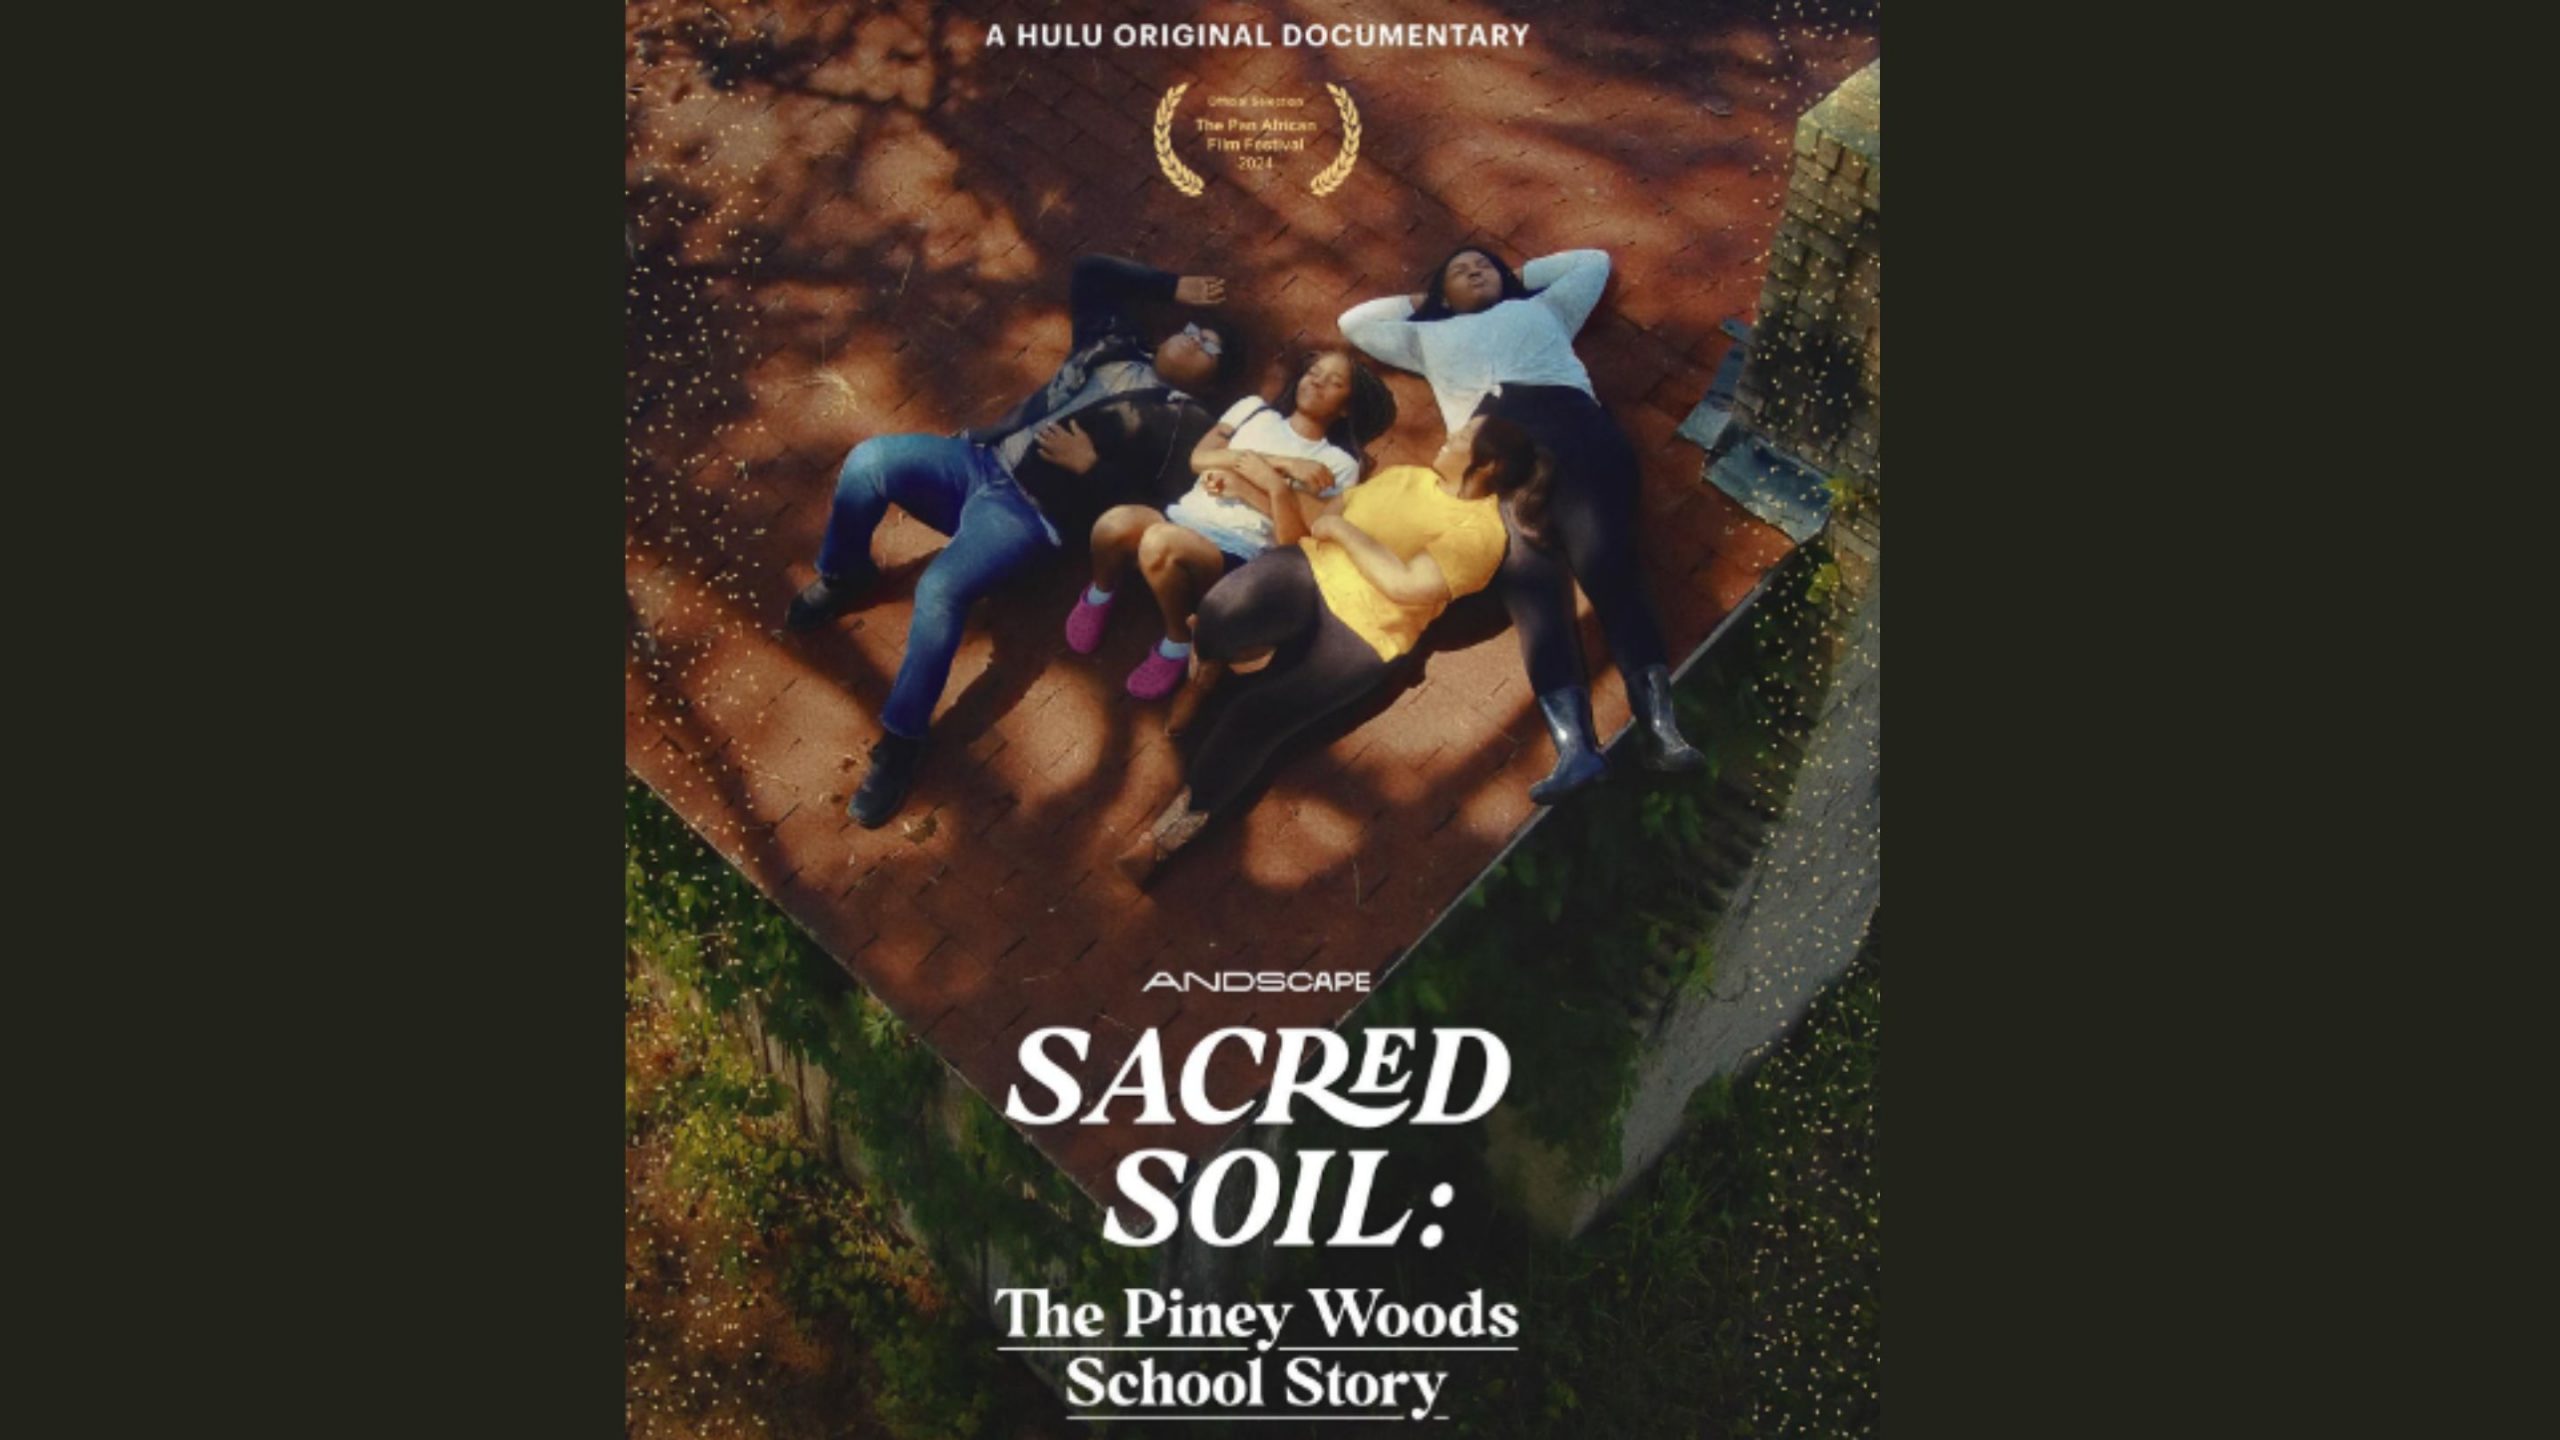 “Sacred Soil: La historia de la escuela Piney Woods”